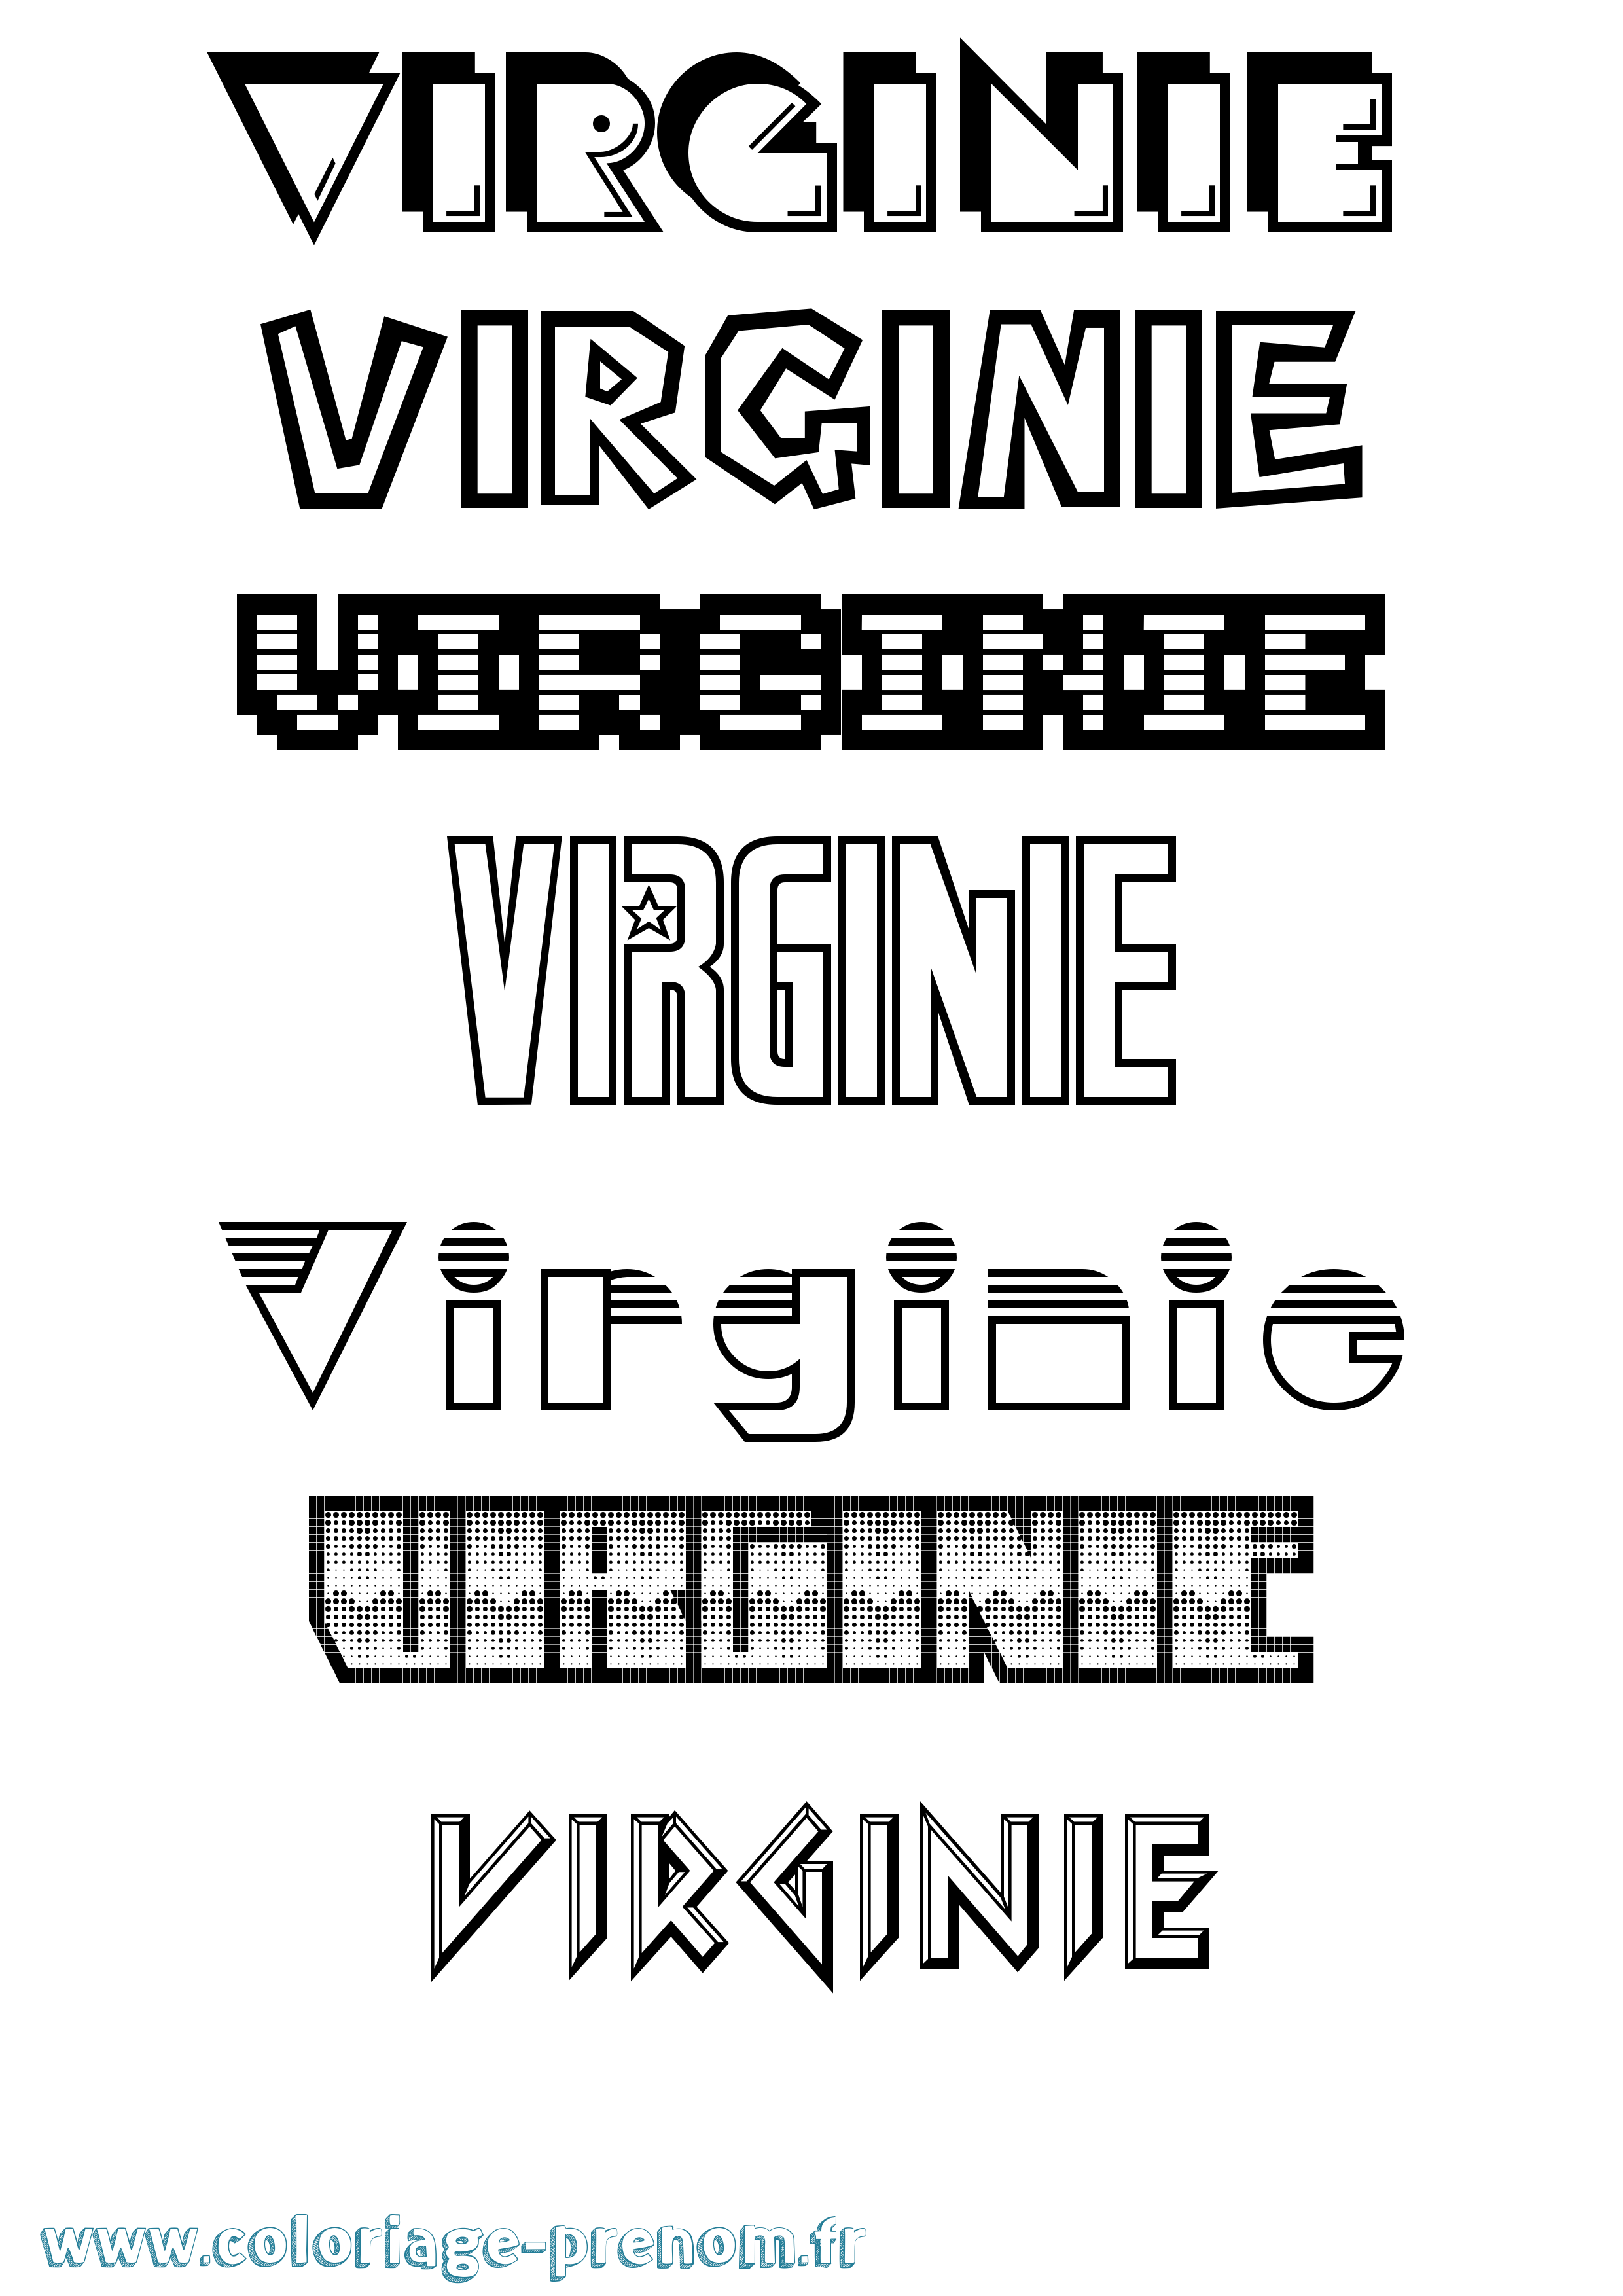 Coloriage prénom Virginie